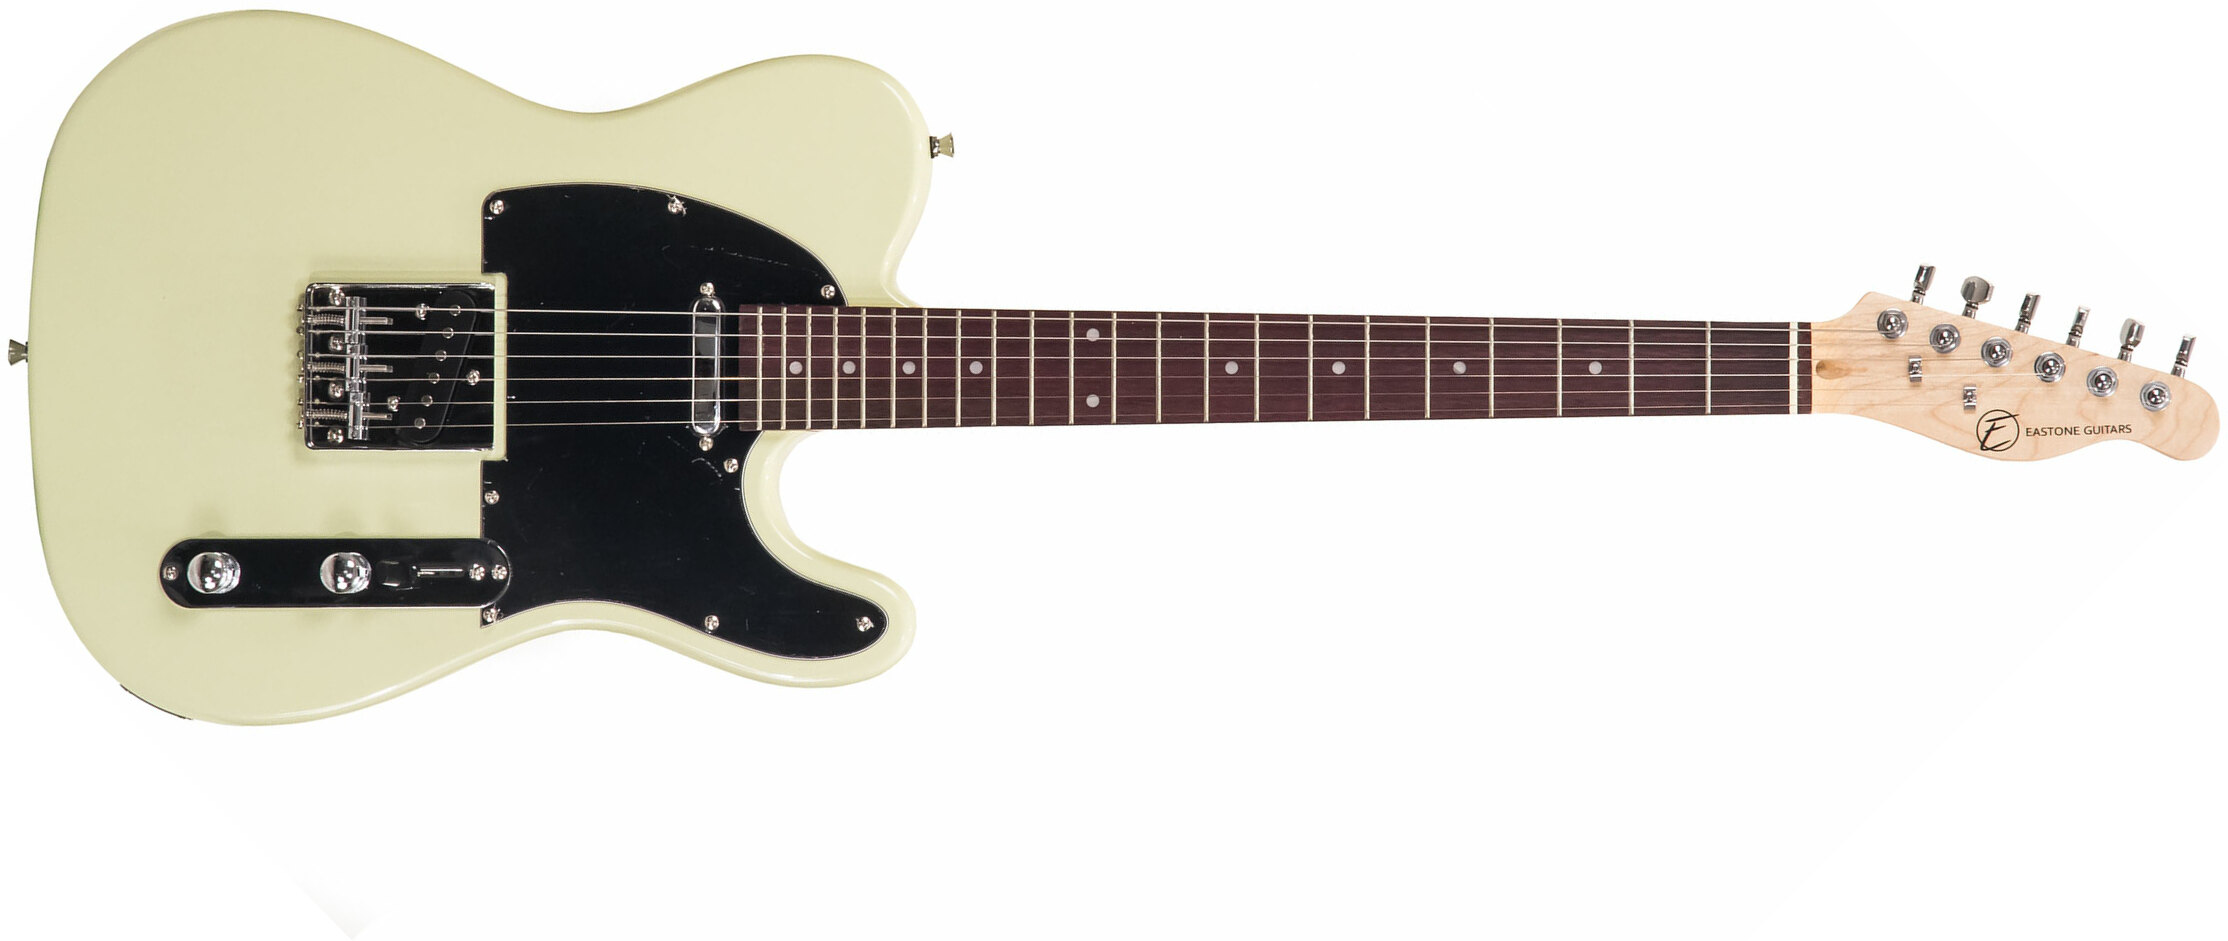 Eastone Tl70 Ss Ht Rw - Ivory - Televorm elektrische gitaar - Main picture